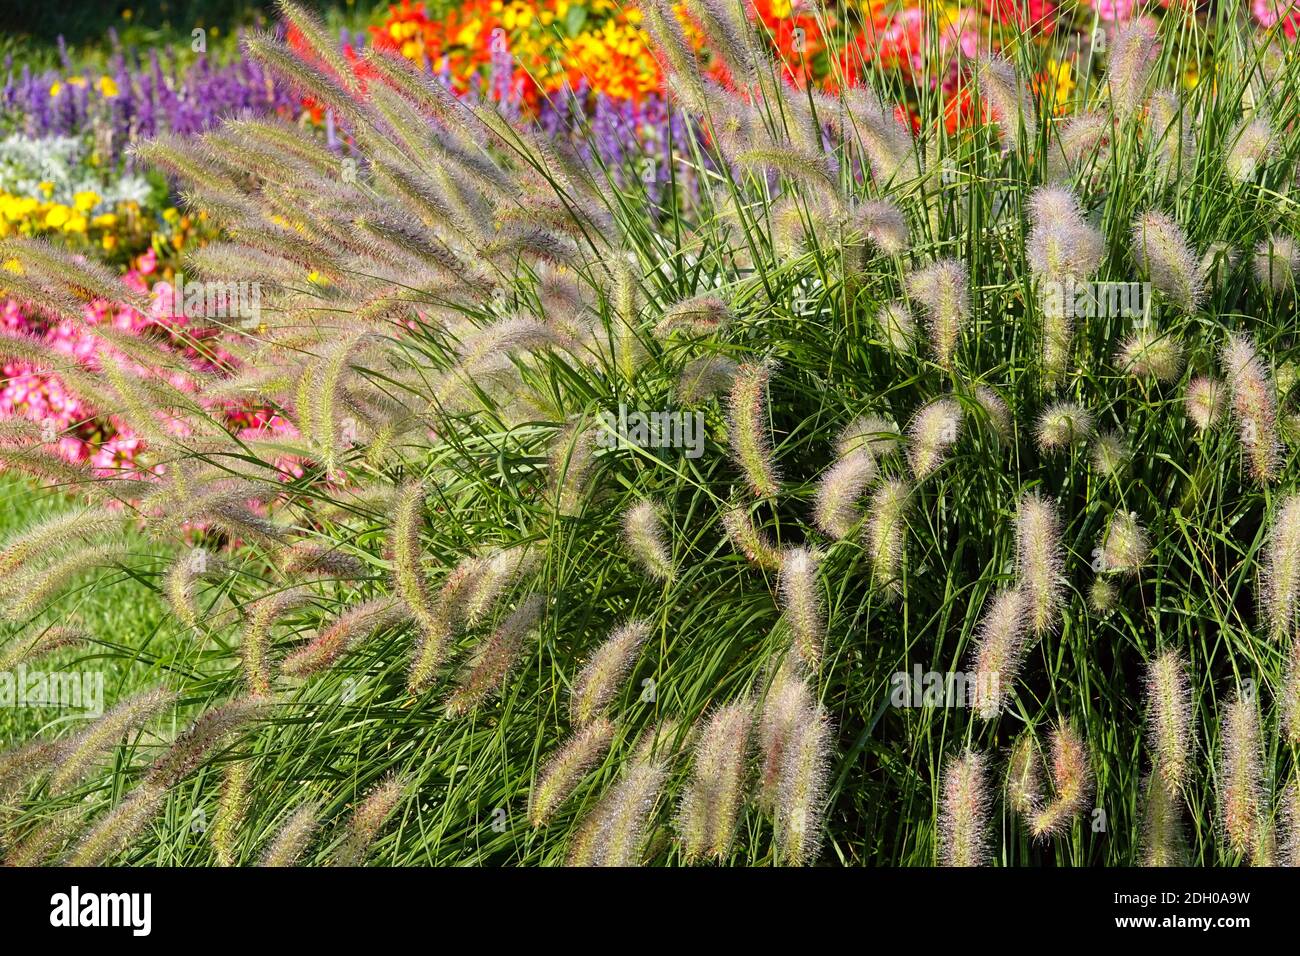 Ornamental grass, feathertop grass, Pennisetum alopecuroides clump Herbaceous perennials autumn border ending summer colorful garden flower bed Stock Photo